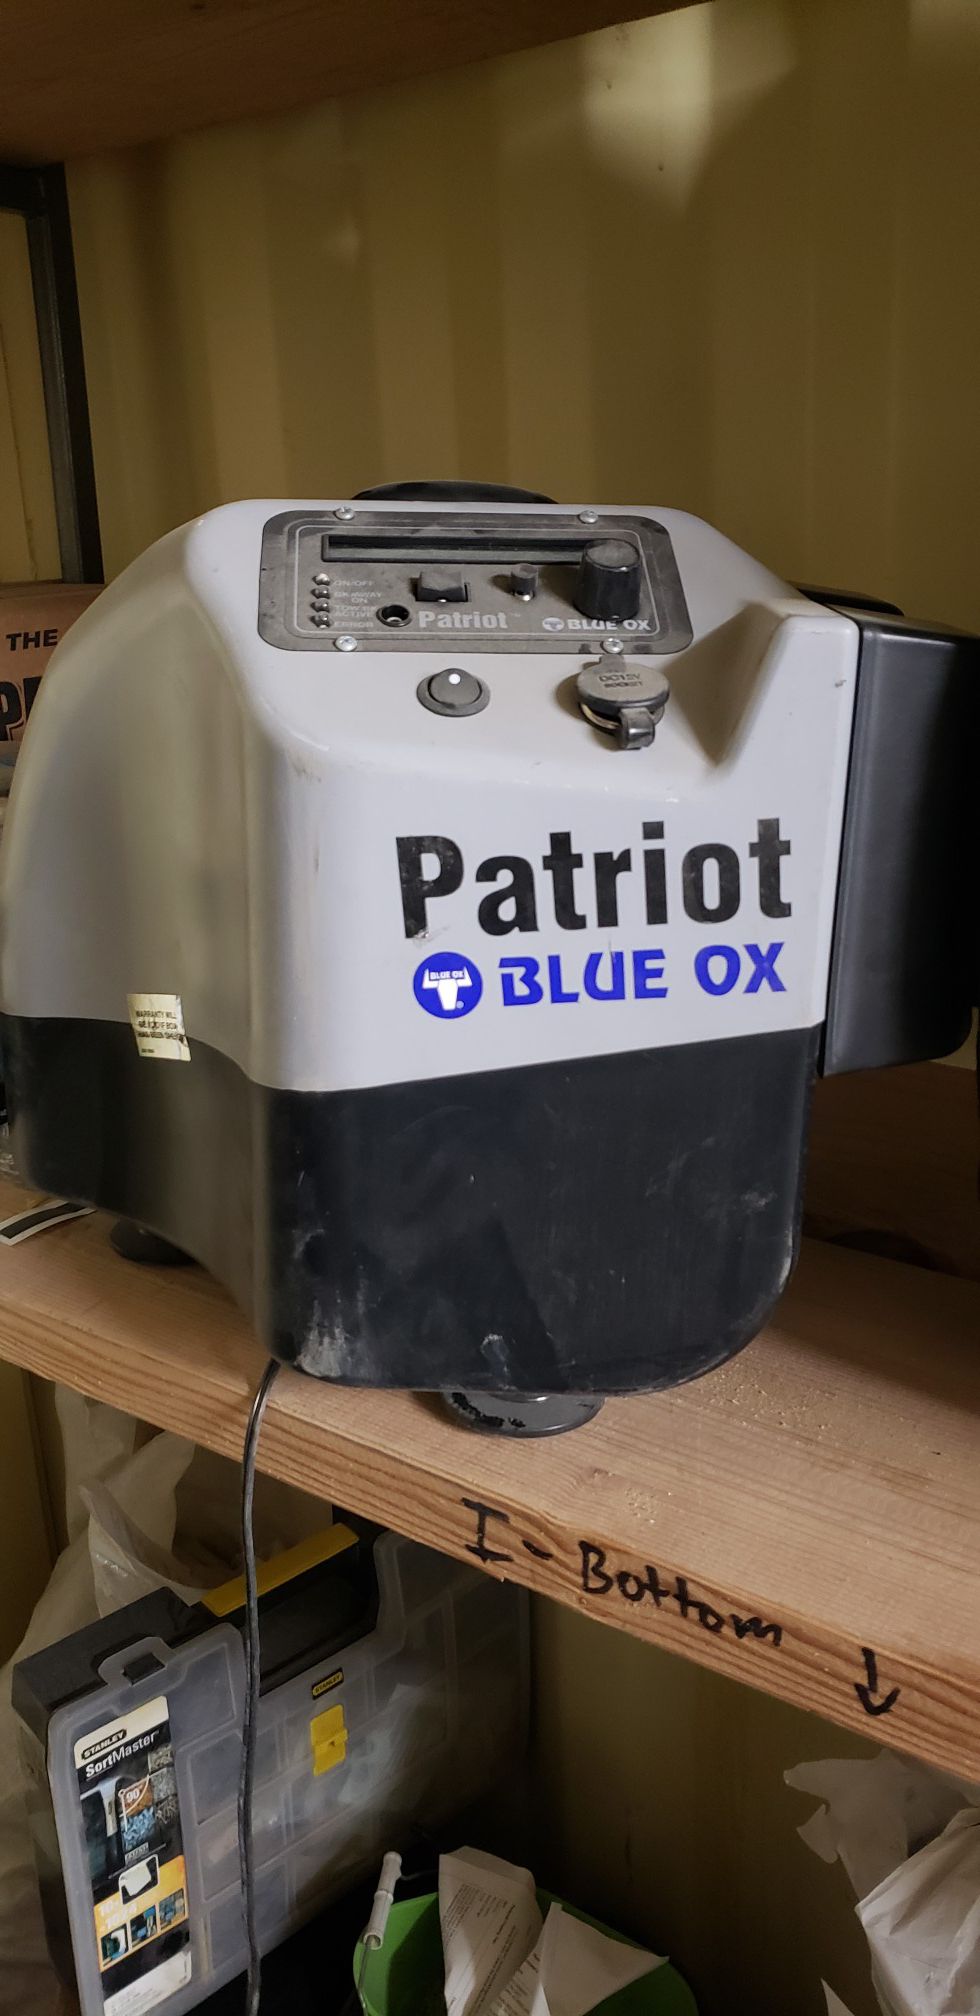 Patriot blue ox Model Brk 2012